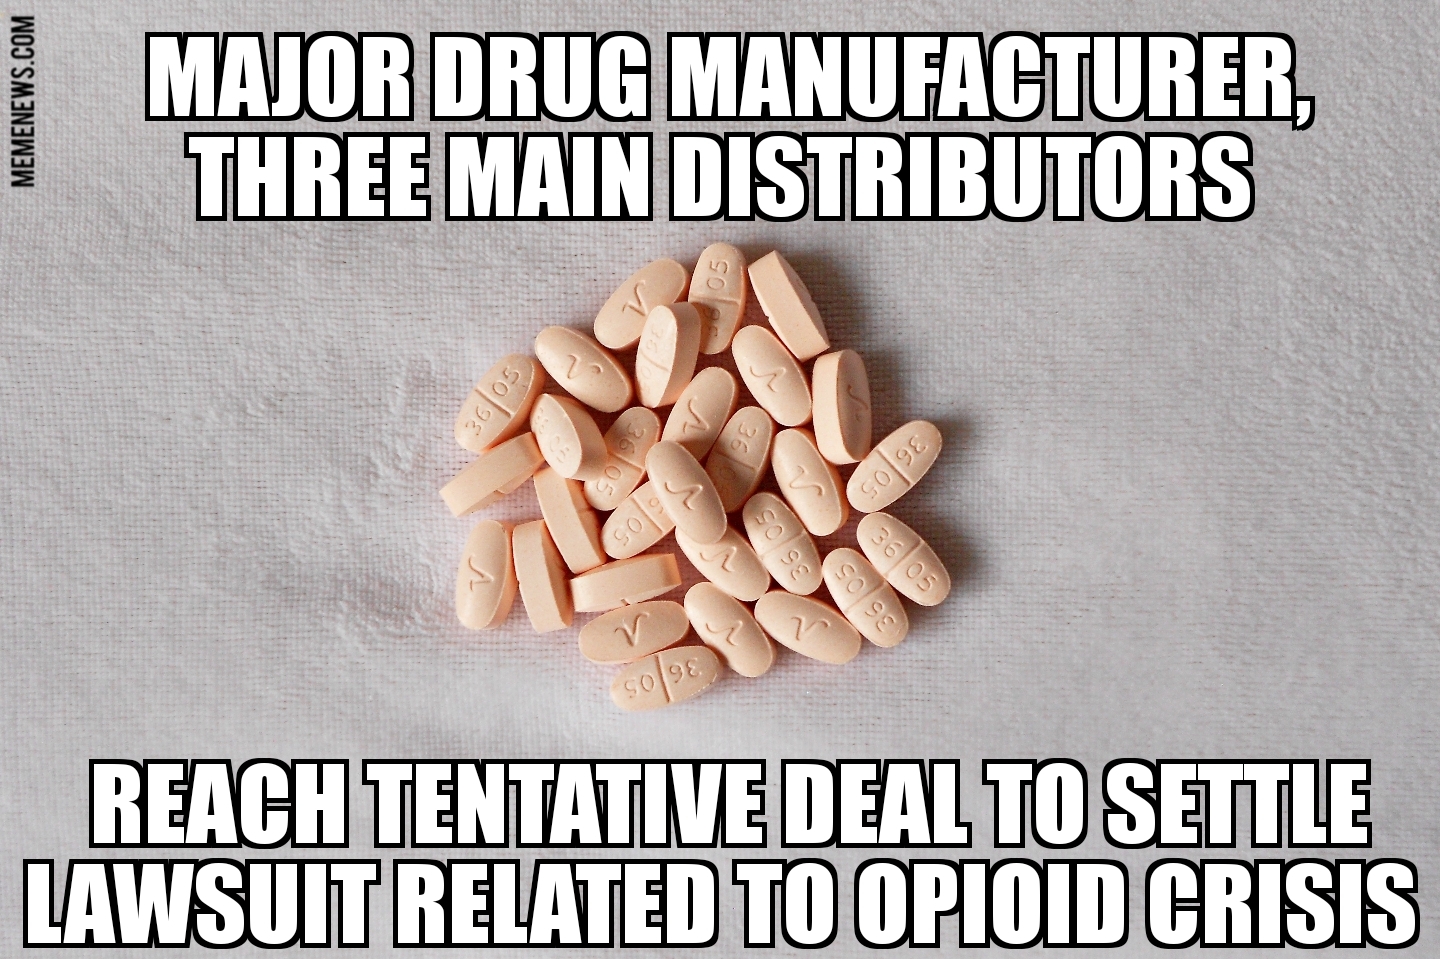 Distributors, manufacturer reach tentative opioid settlement